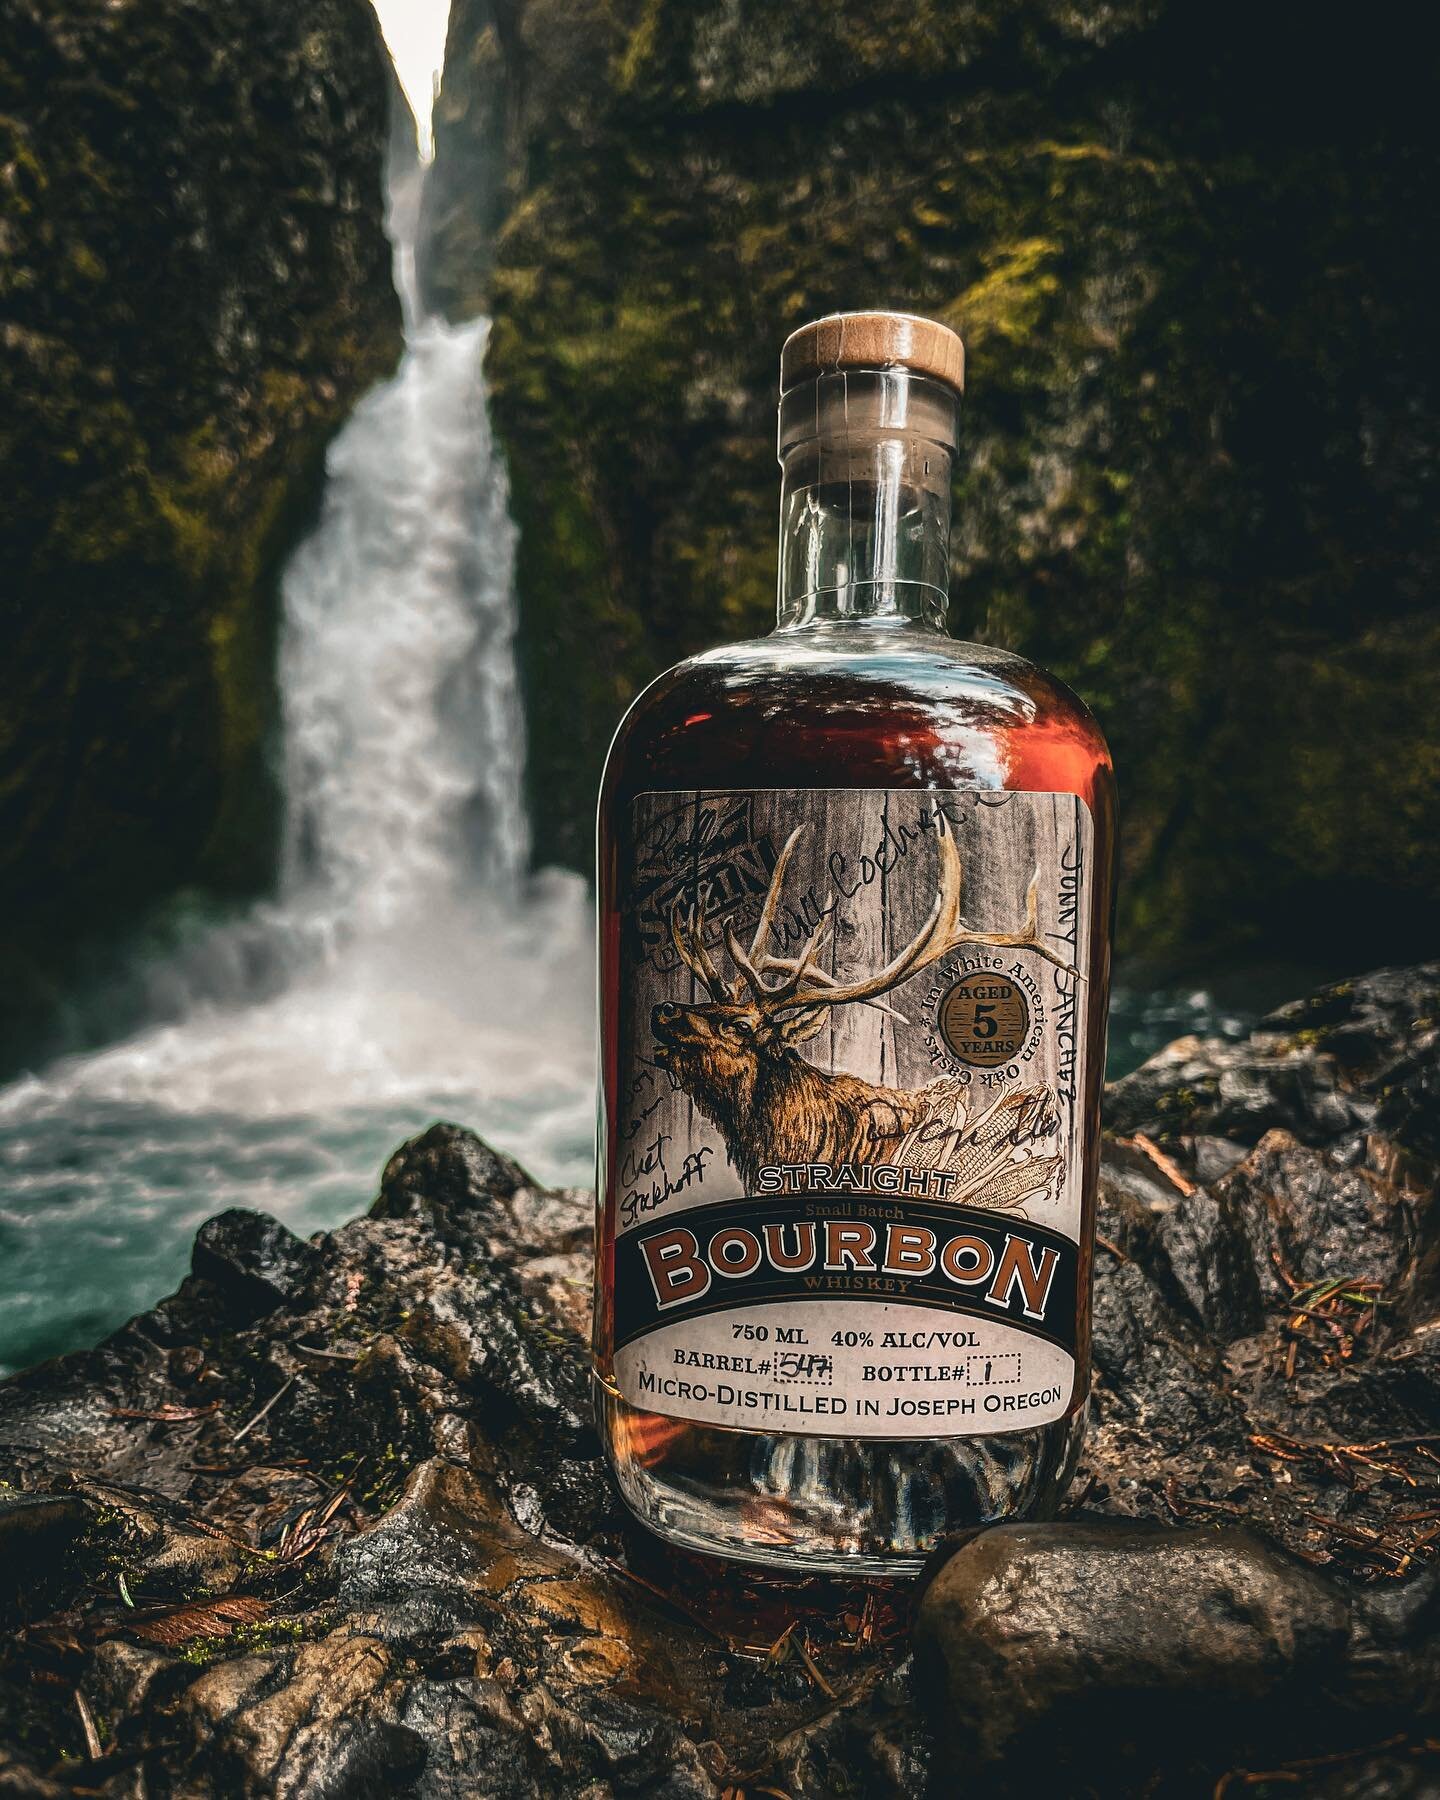 Chase waterfalls that end with whiskey tastings. 🥃
.
.
.
.

#cocktails #craftspirits #whiskey #bourbon #rum #rye #vodka #blend #mix #drink #distill #artisancocktail #spiritforward #cheers  #craft #craftcocktails #tastingroom #community #josephoregon